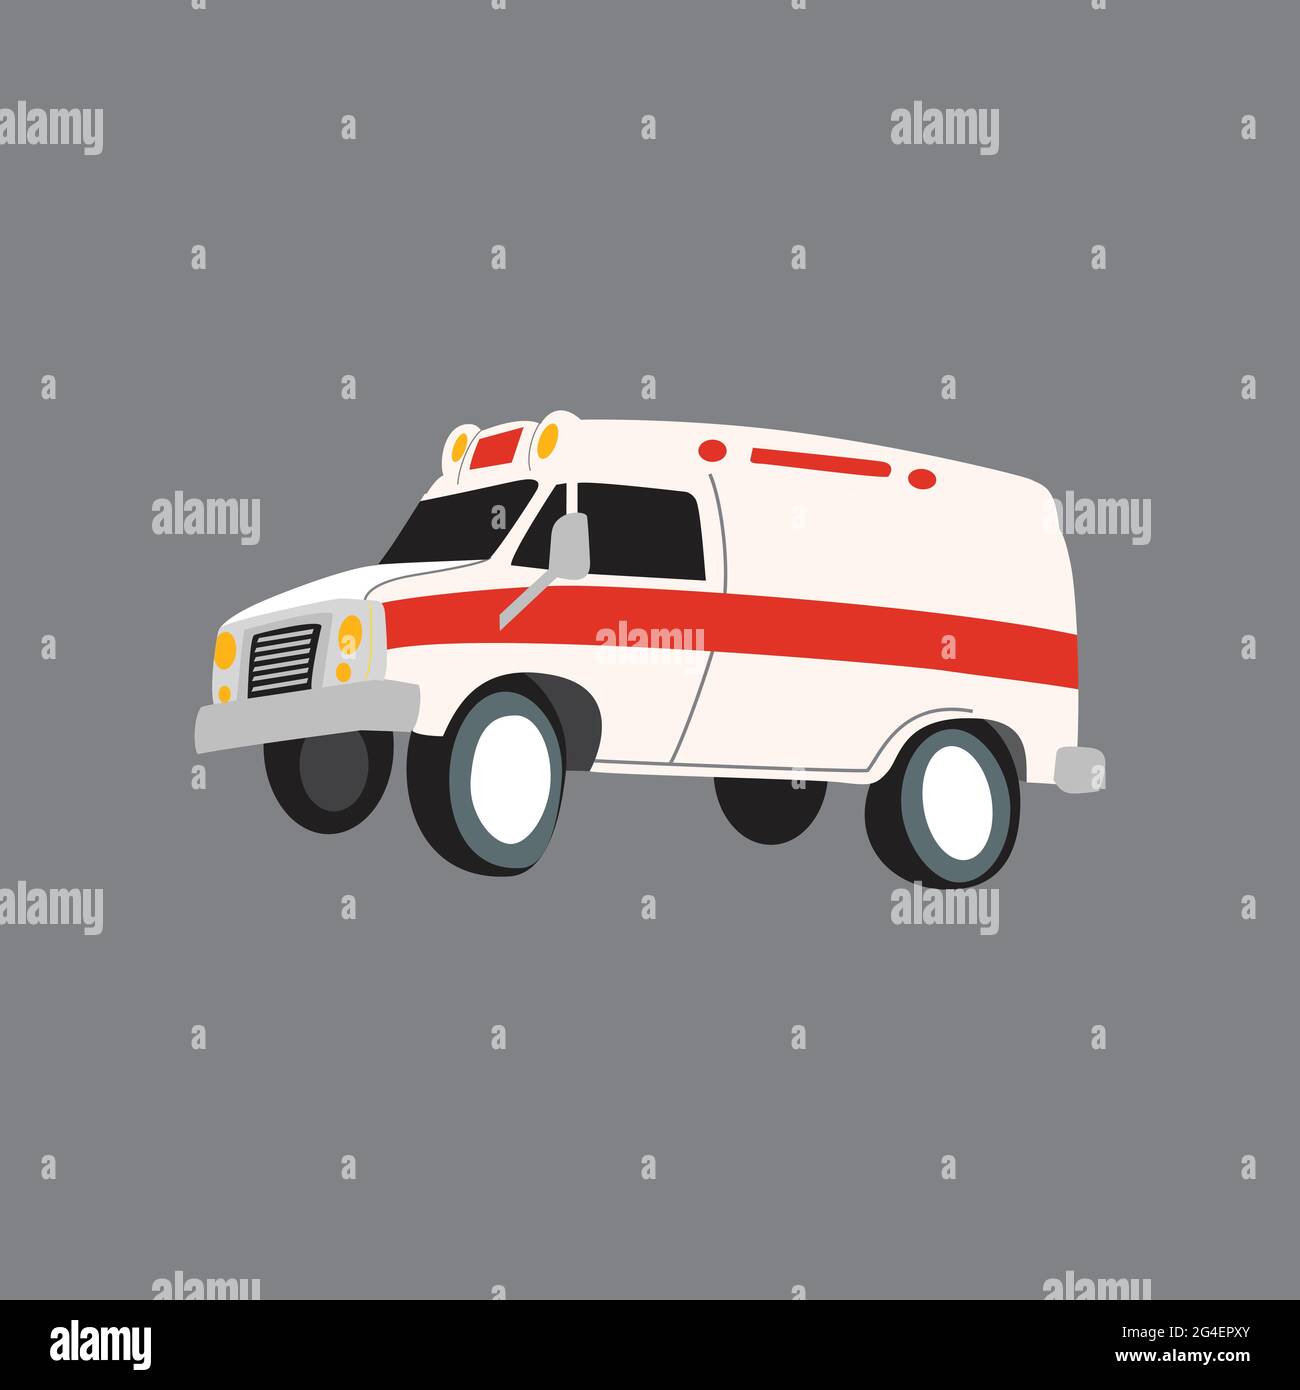 ambulance car in flat design vector illustration Stock Vector